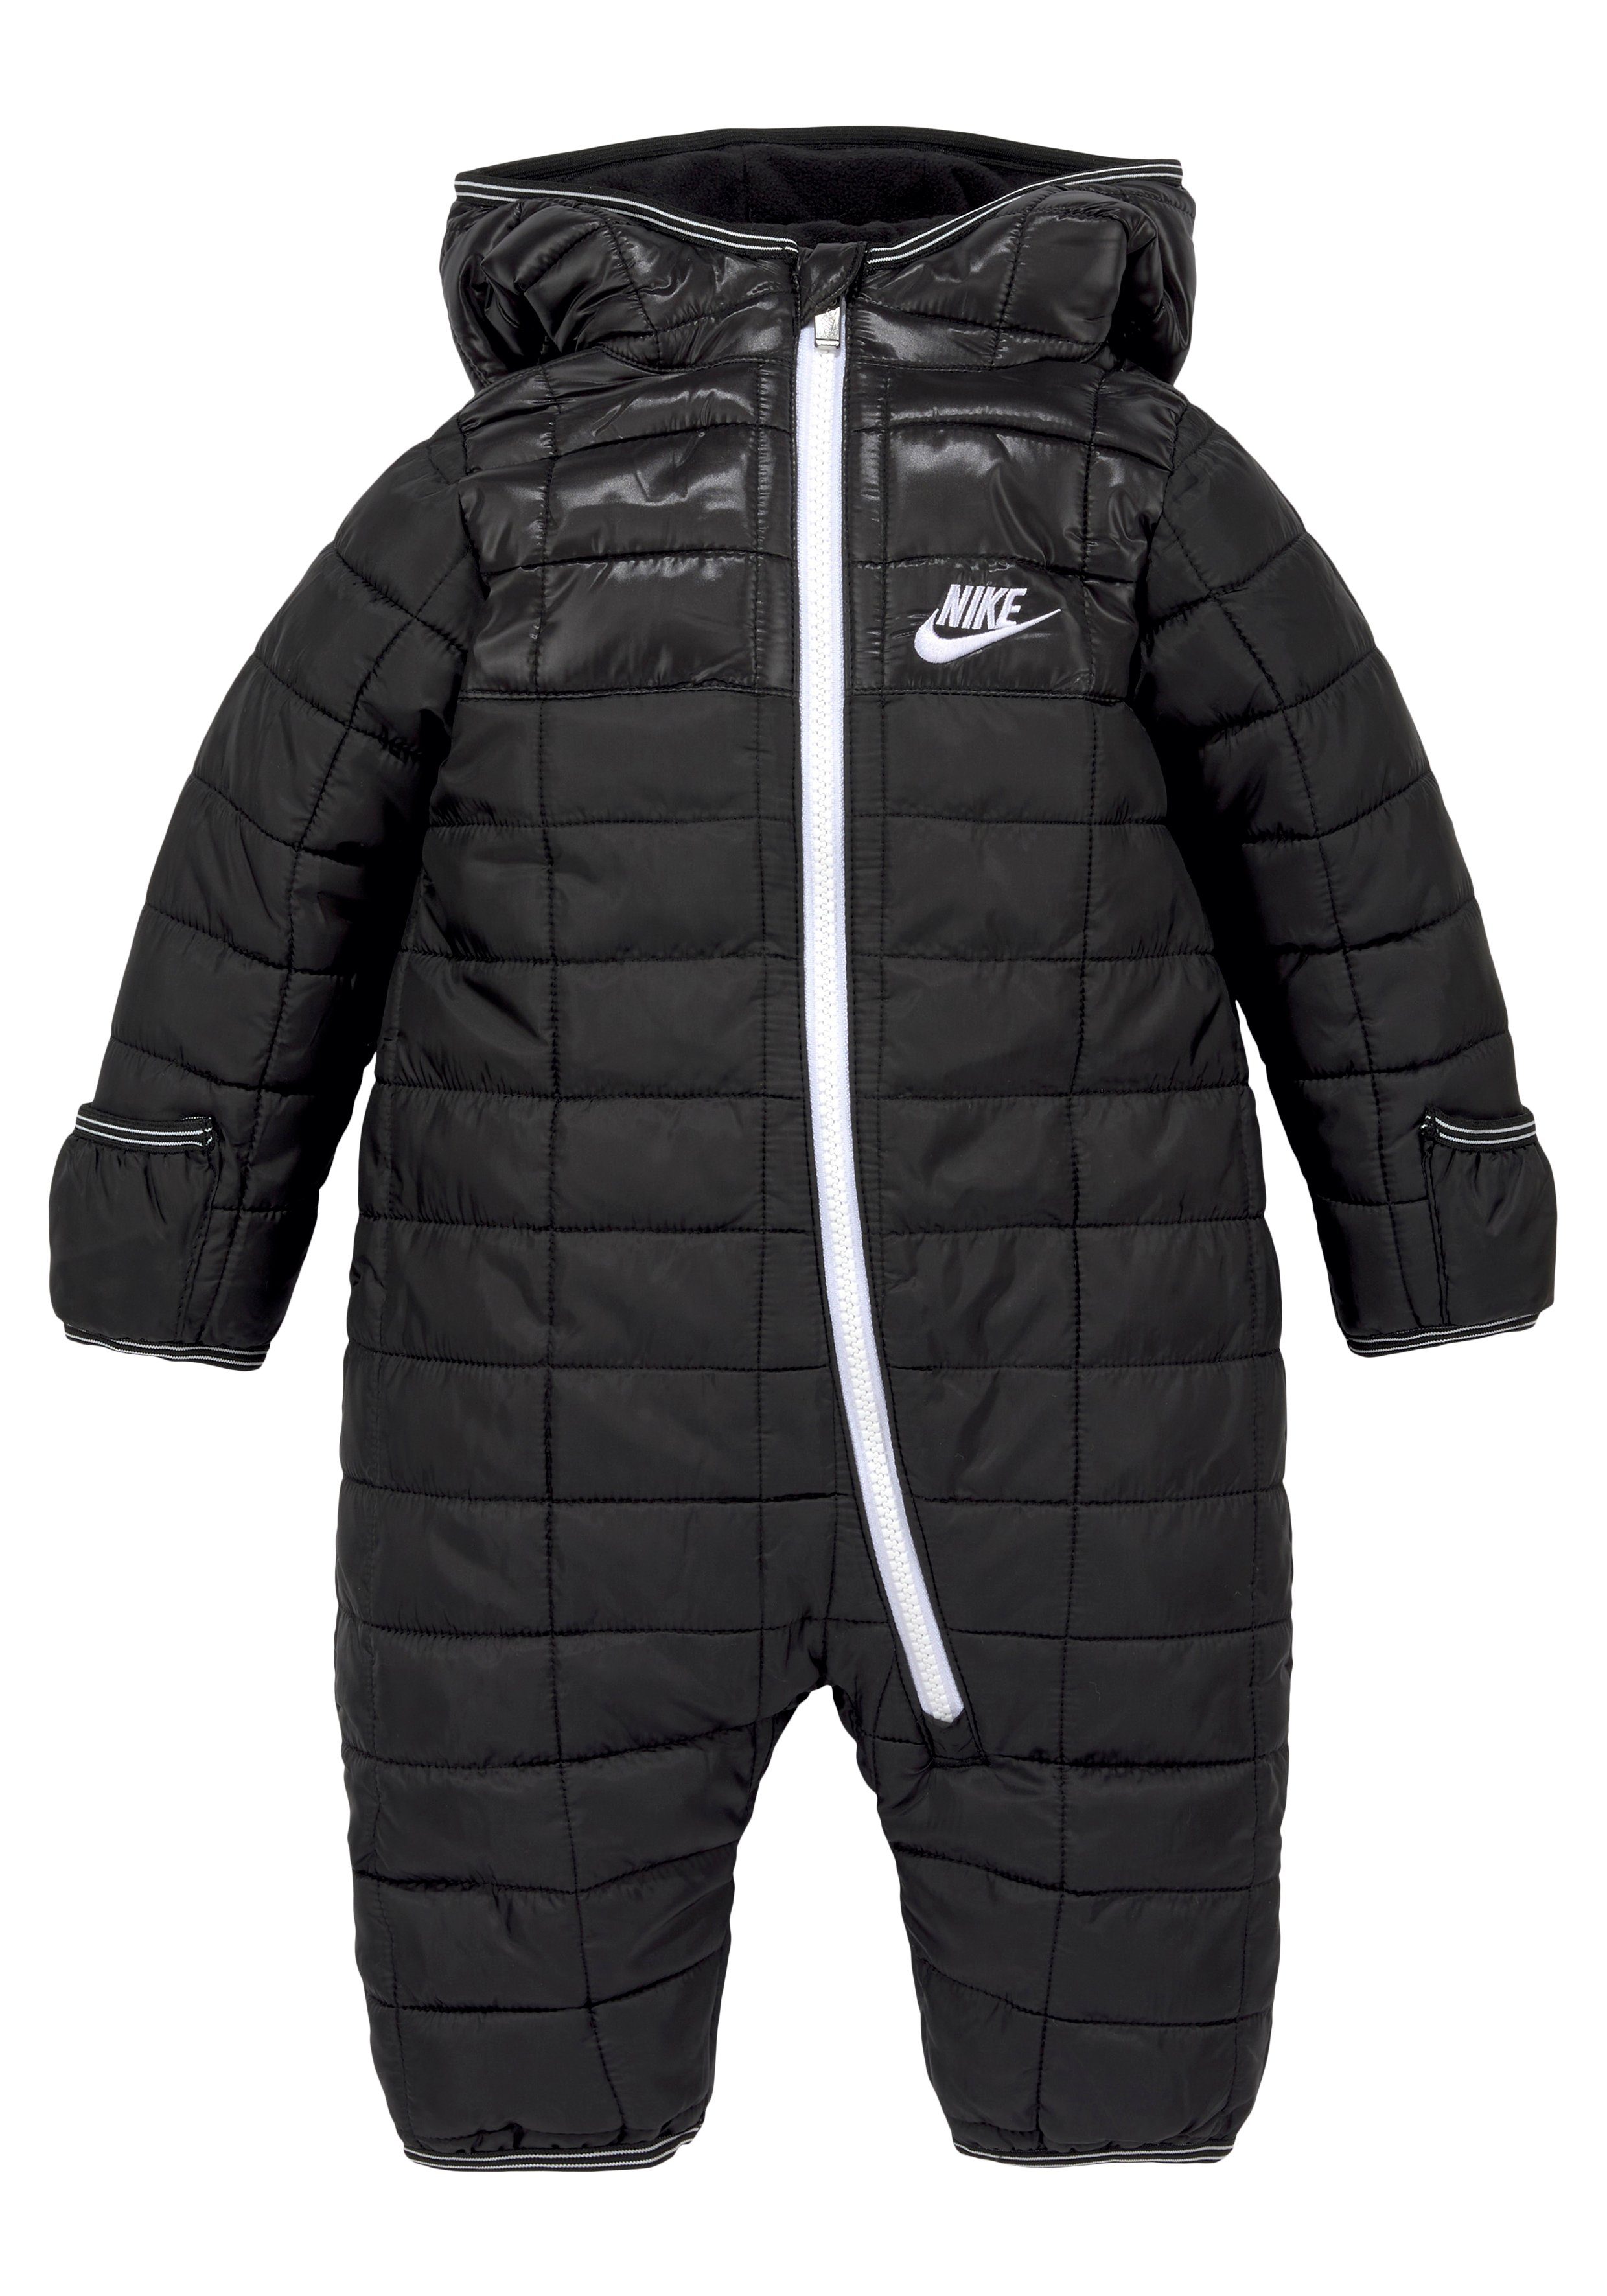 COLORBLOCK Nike Sportswear schwarz Schneeoverall SNOWSUIT